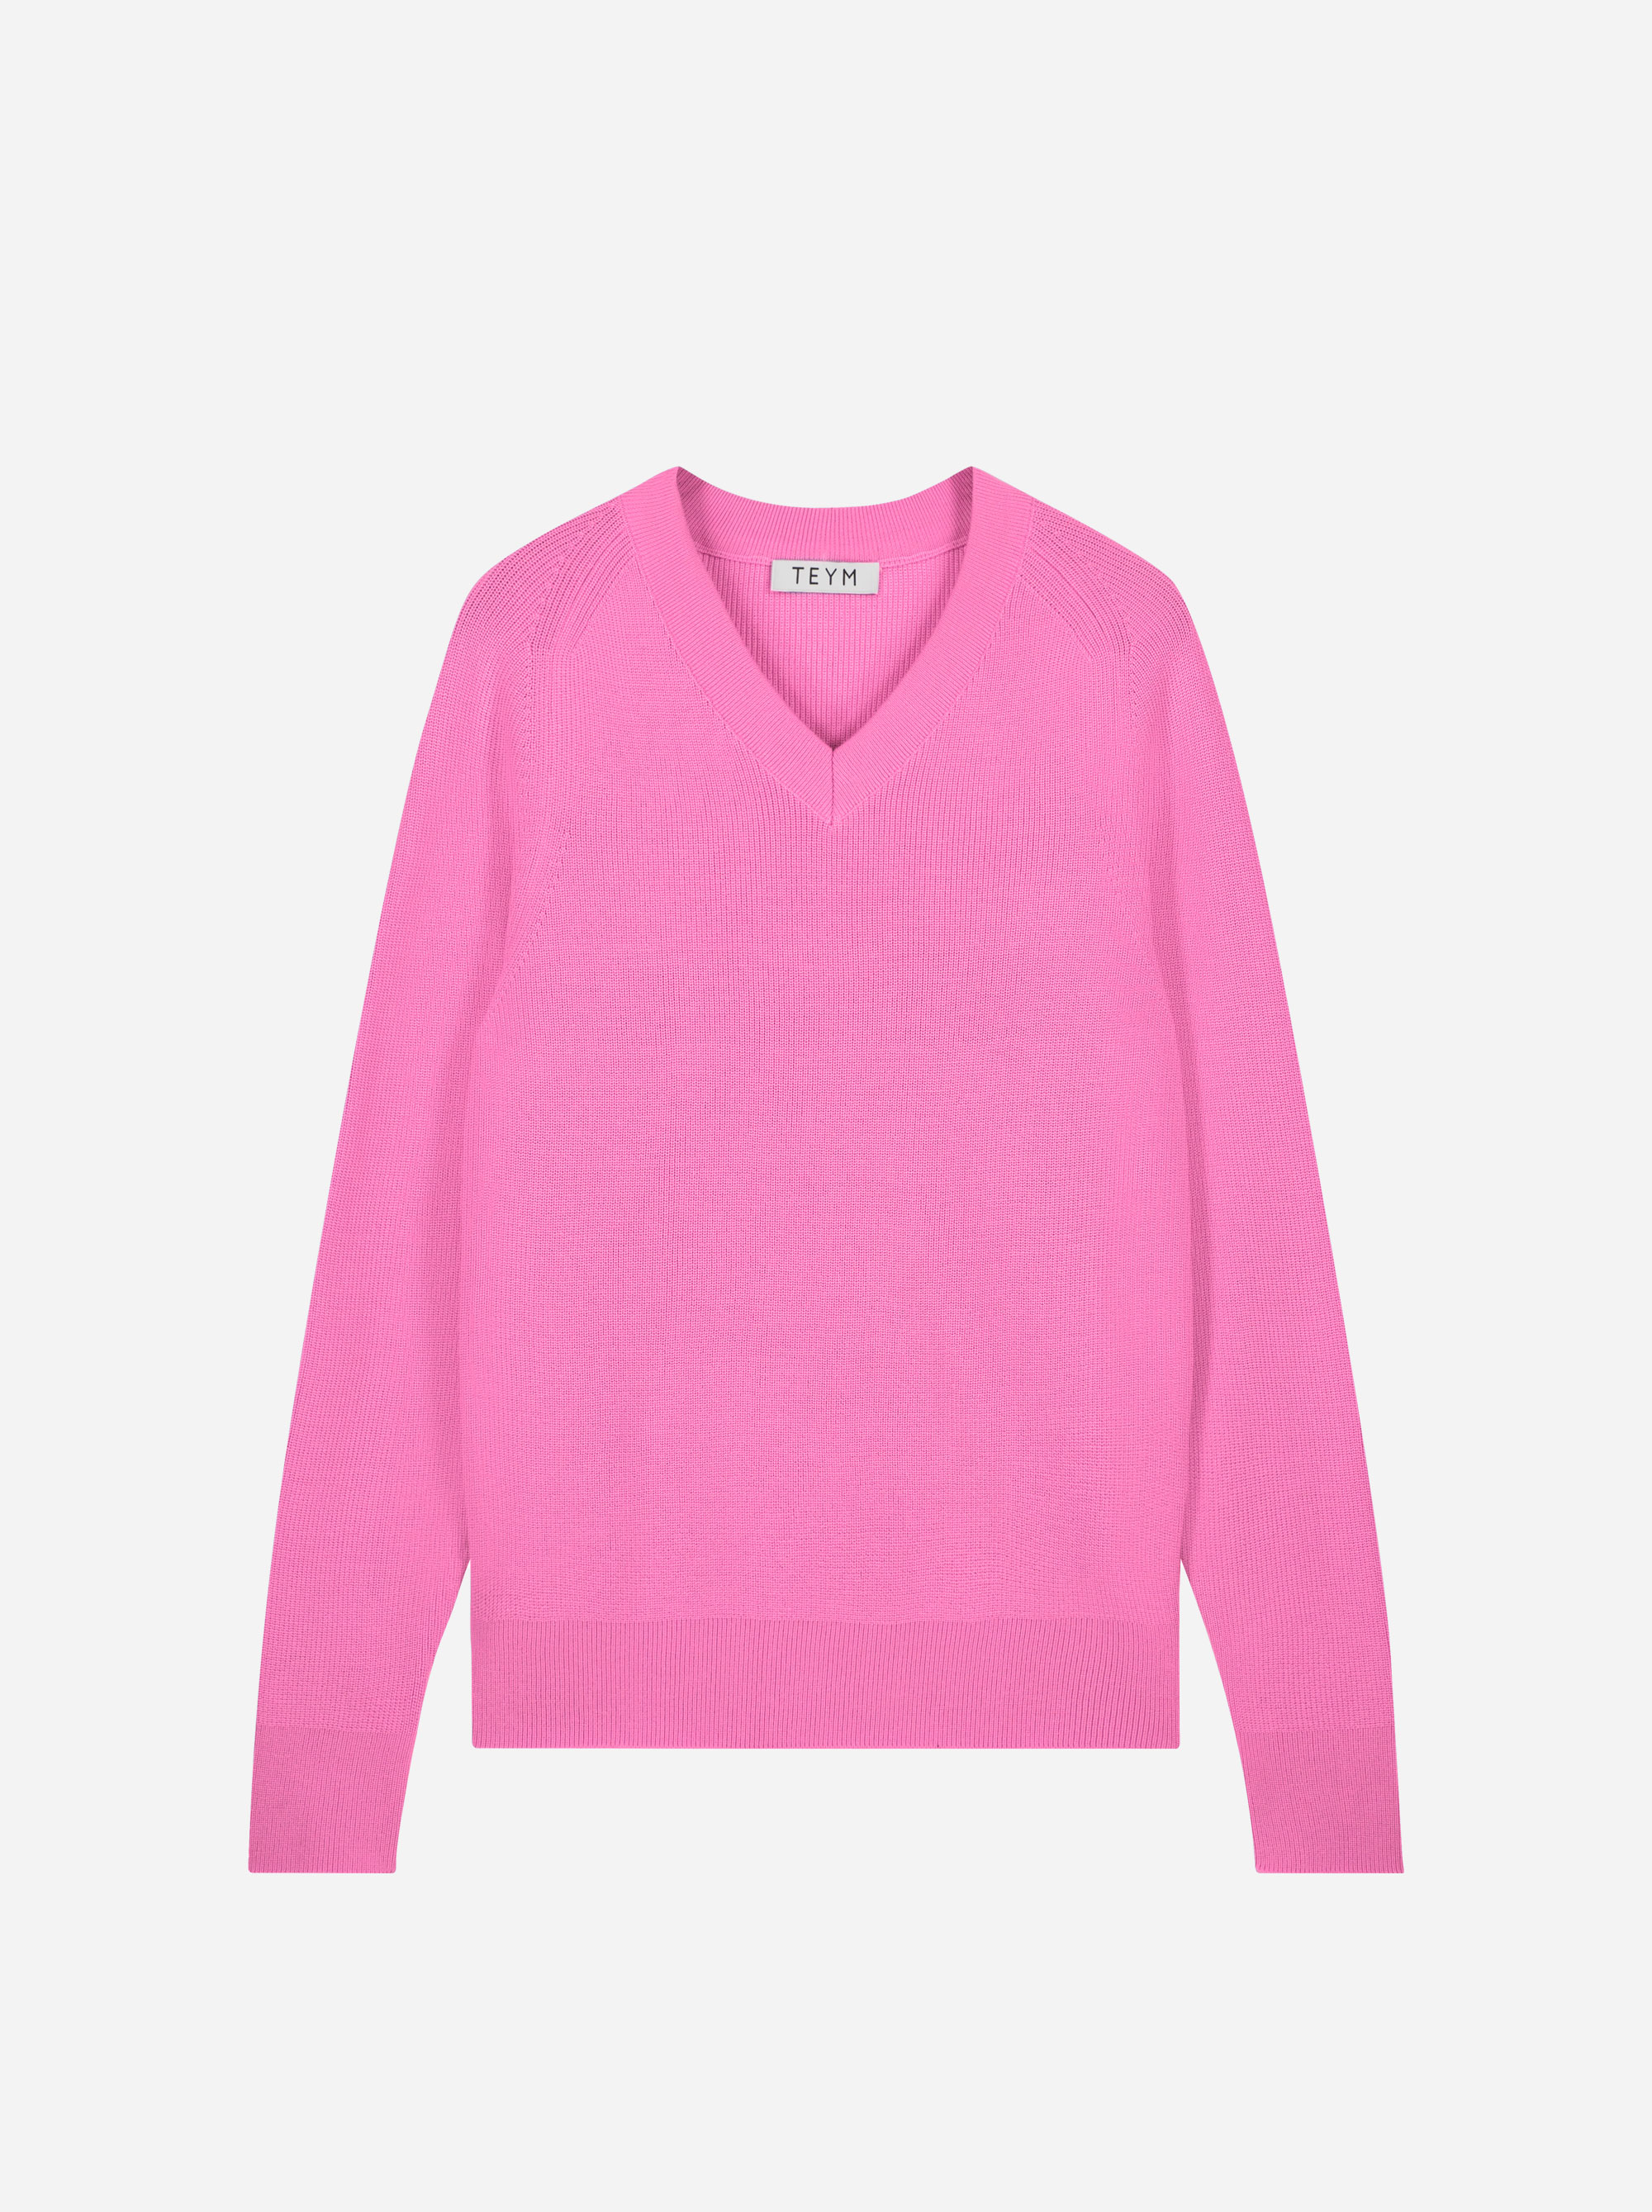 Teym - V-Neck - The Merino Sweater - Men - Bright Pink - 3